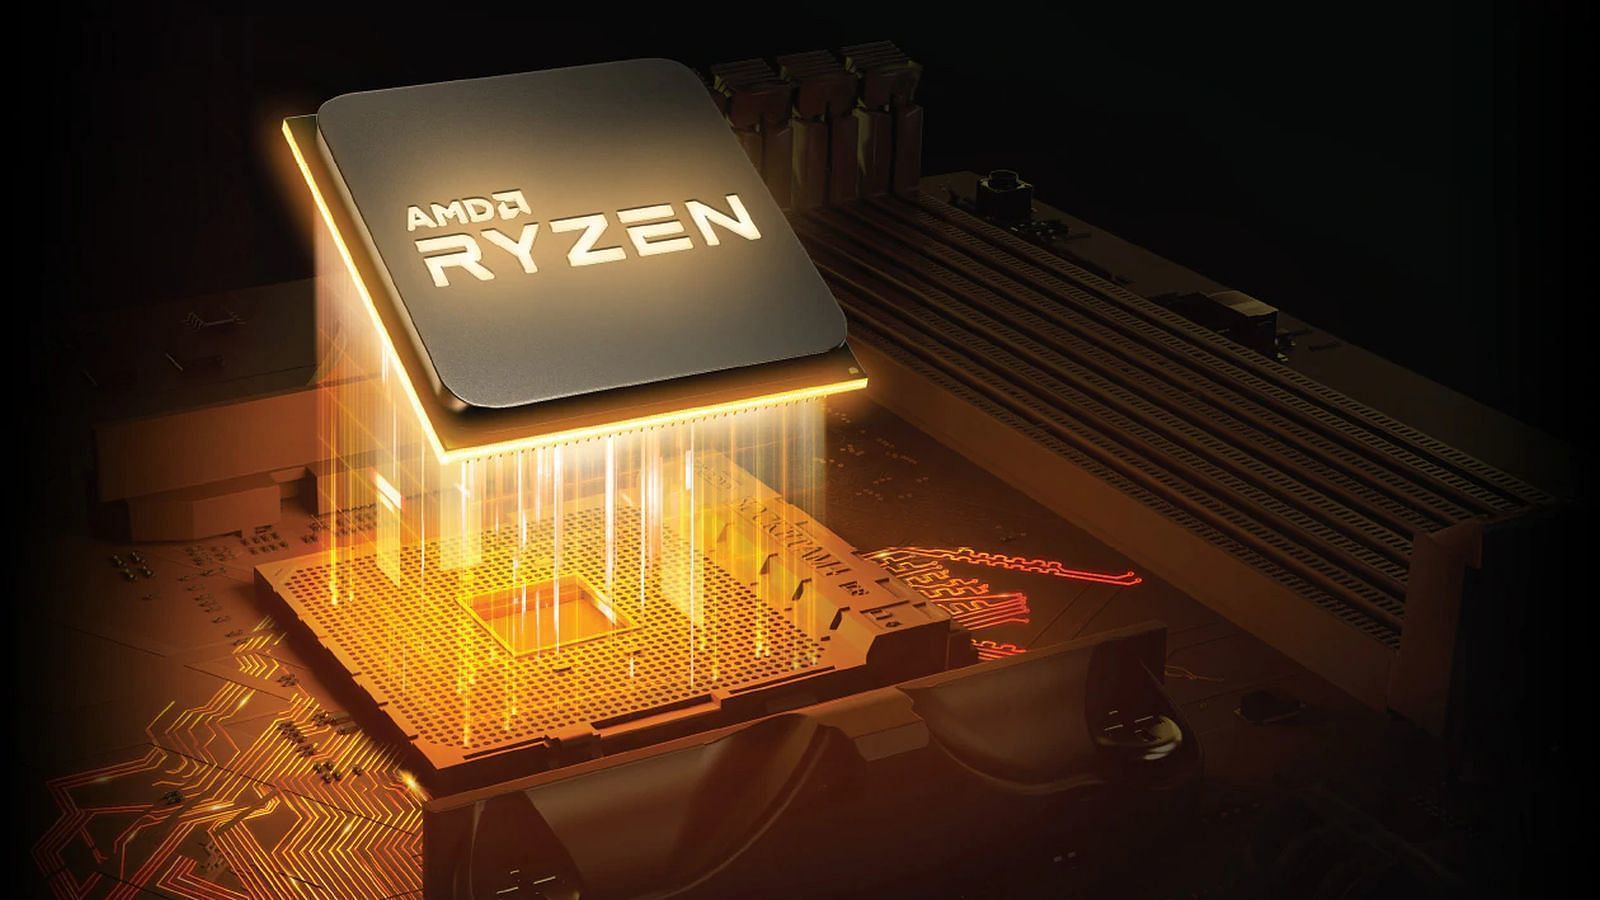 An AMD Ryzen chip (Image via AMD)